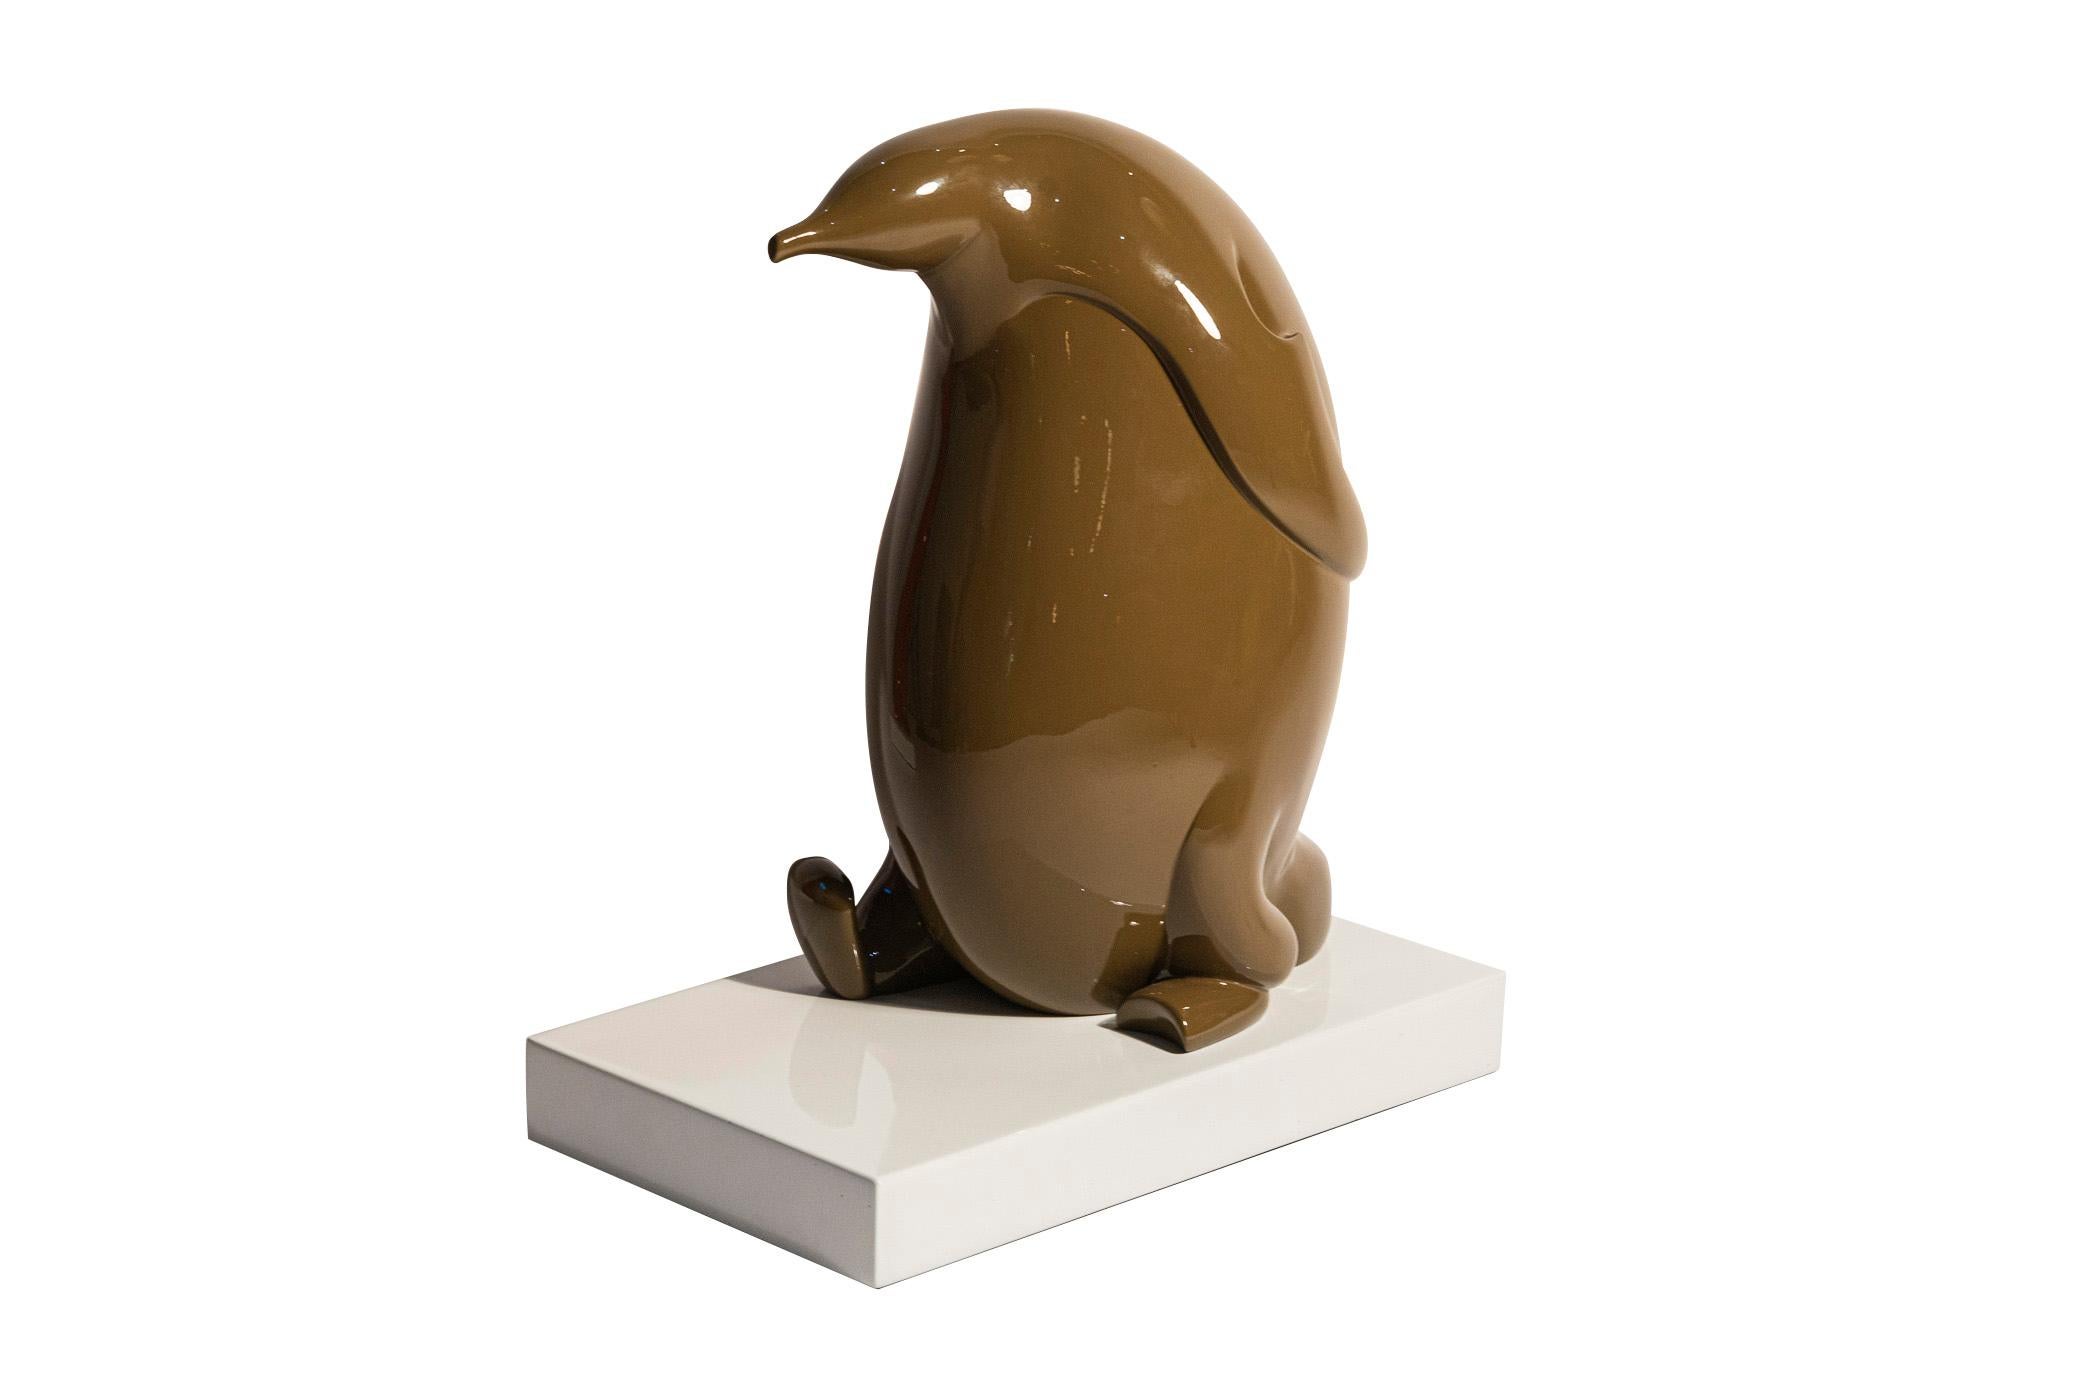 Bernard Conforti, 
Penguin sculpture, 
Resin, 
Signed and numbered II/IV, 
France, circa 2010.

Measures: Height 41 cm, width 22 cm, depth 35 cm.